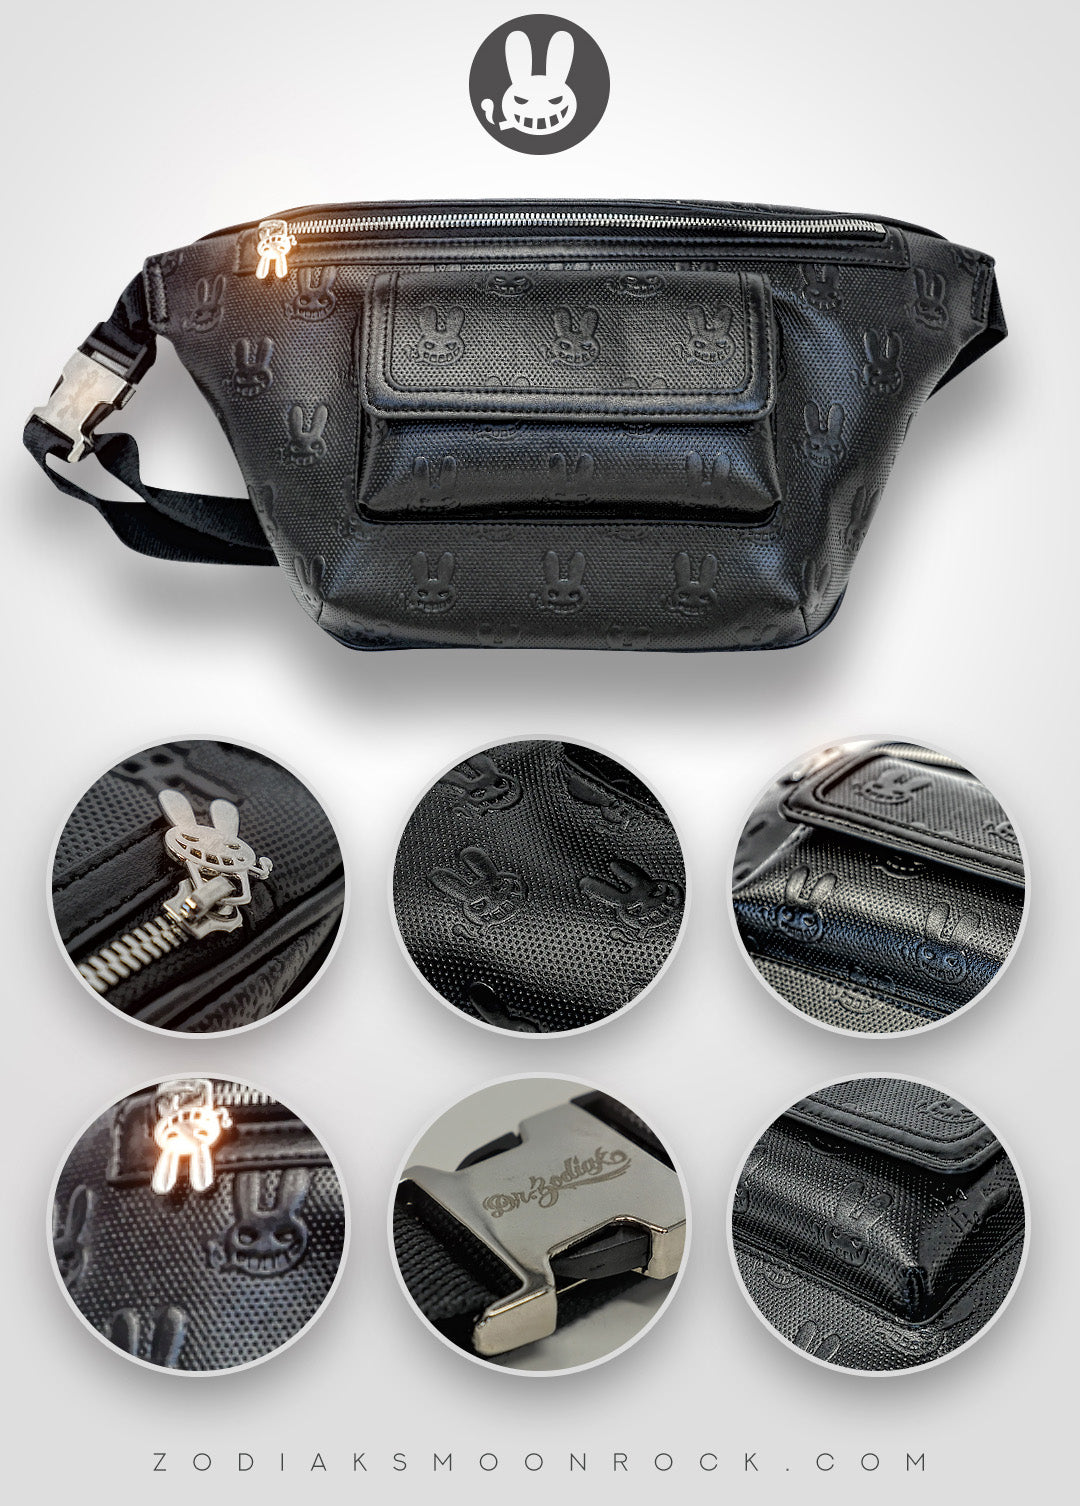 Dr. Zodiak's Moonrock Limited Edition Leather Cross Body Bag -Black